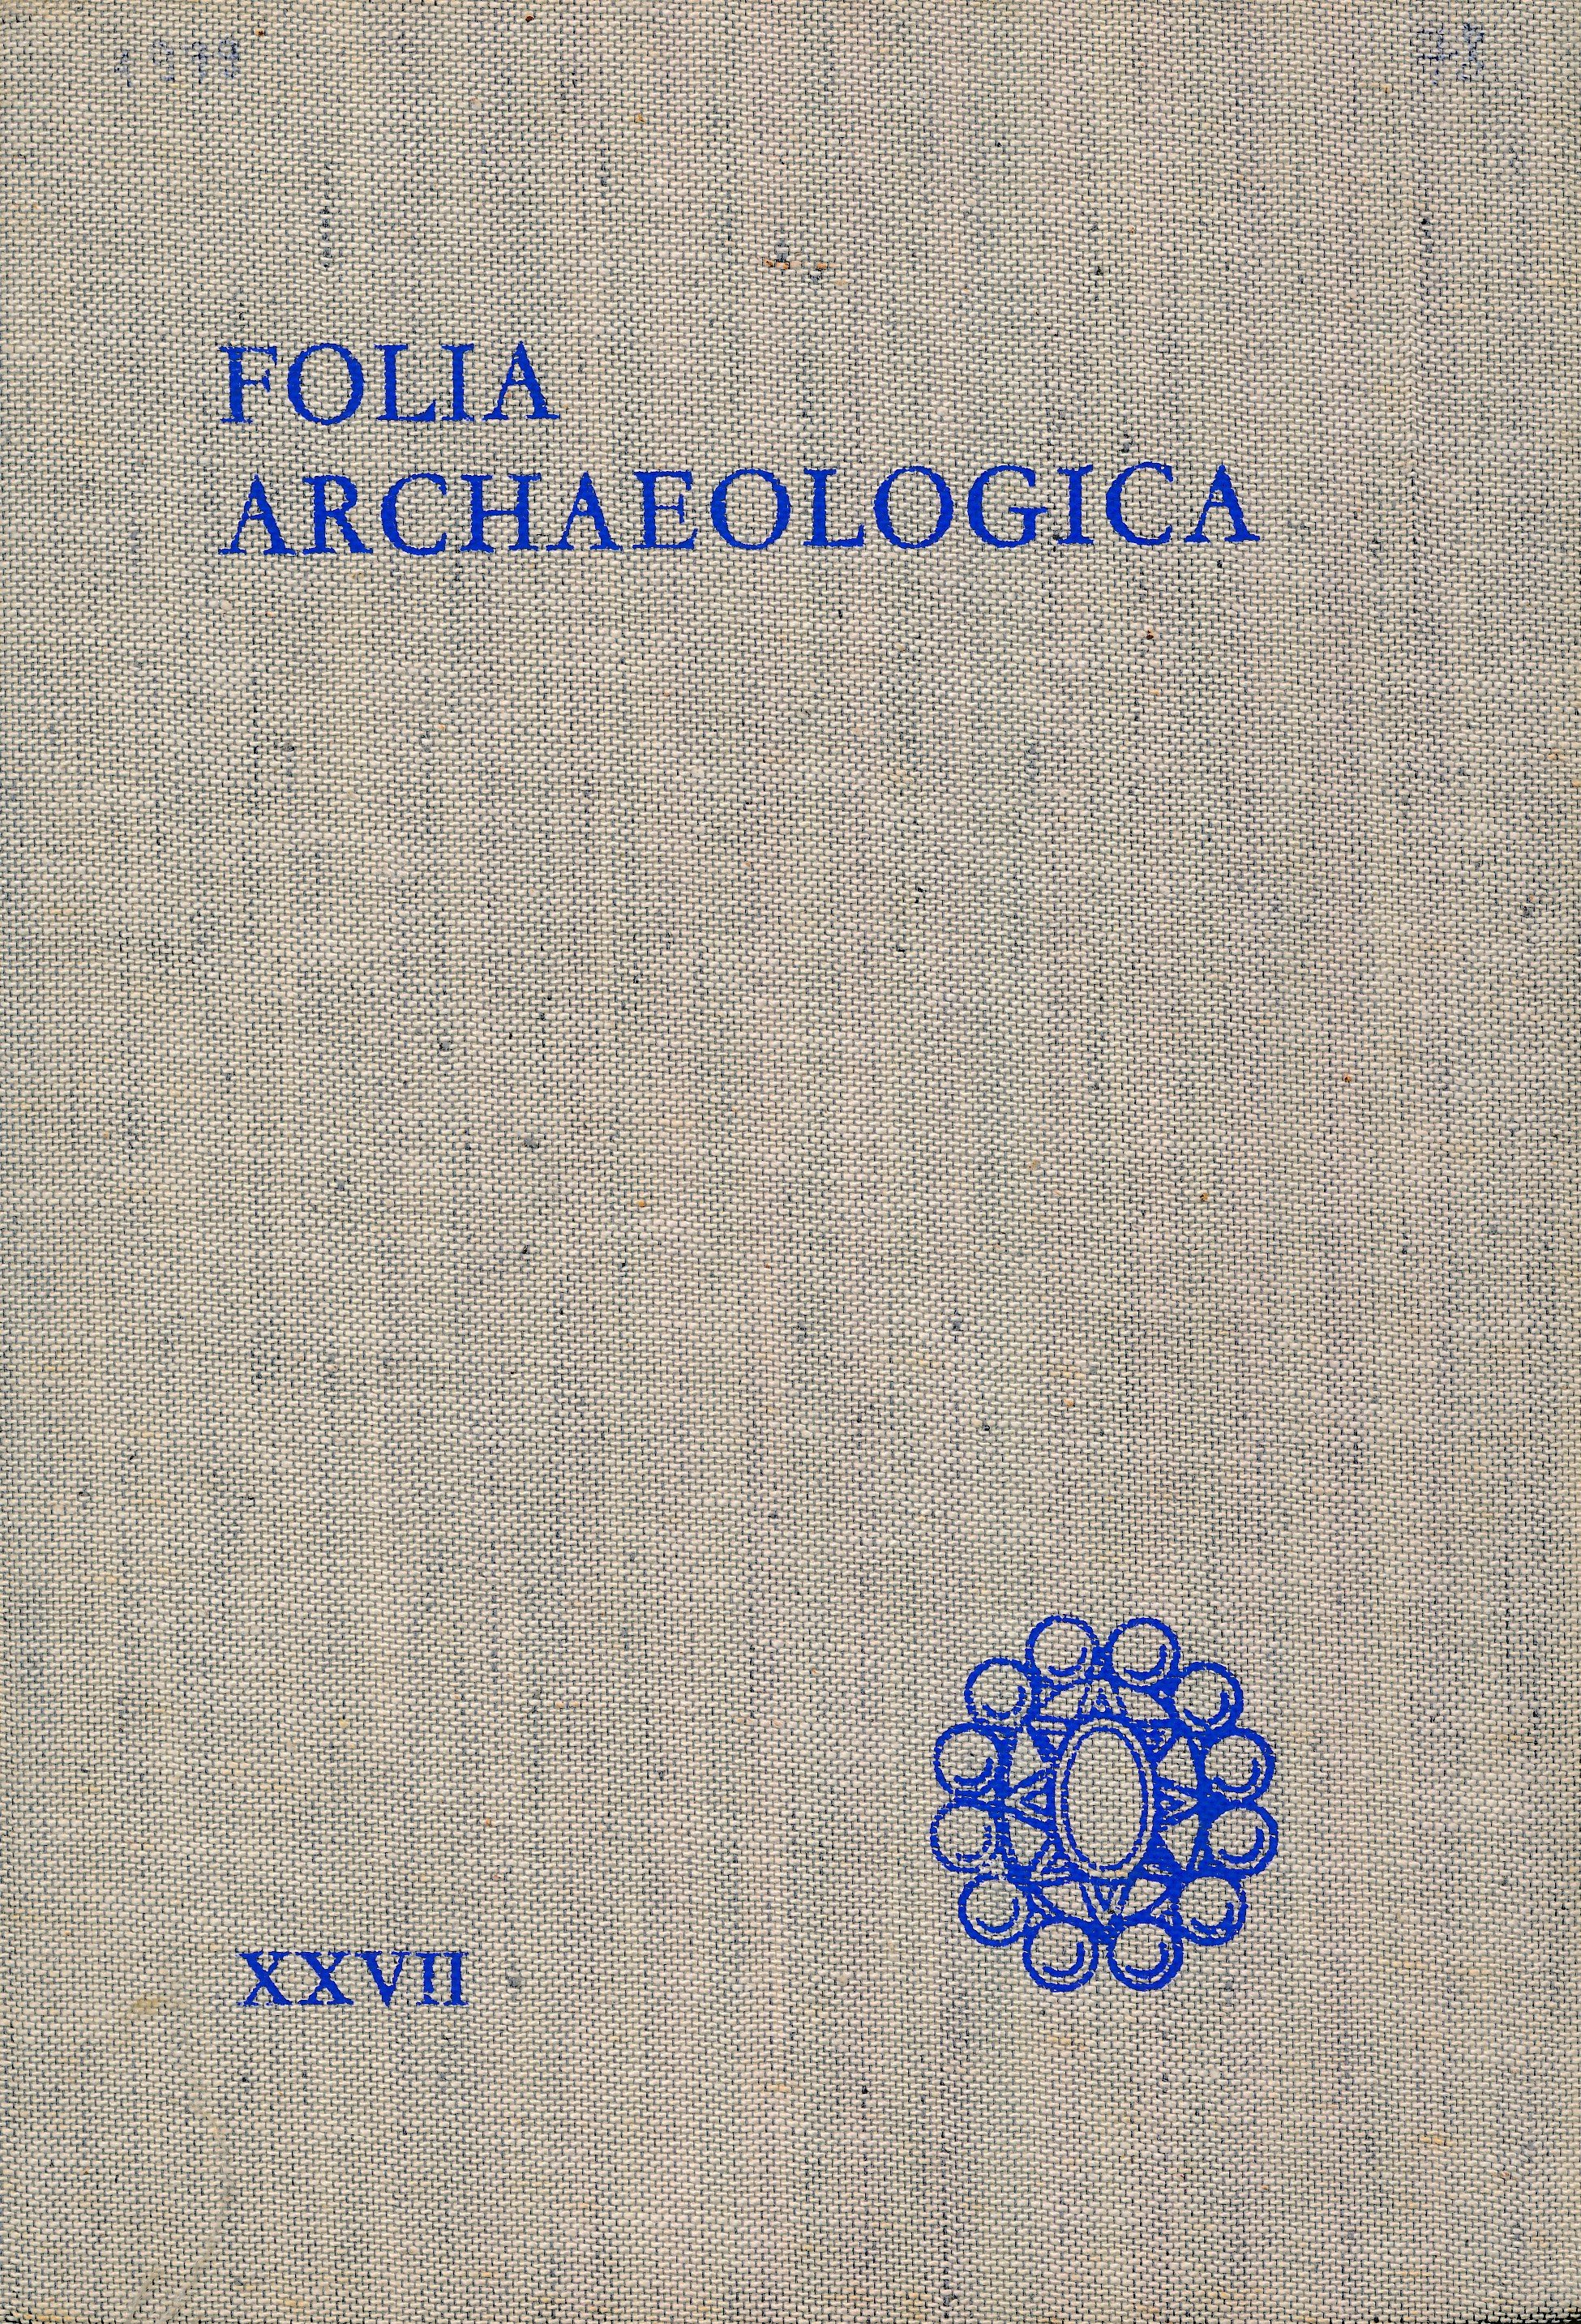 Folia archaeologica XXVII. (Erkel Ferenc Területi Múzeum, Gyula CC BY-NC-SA)